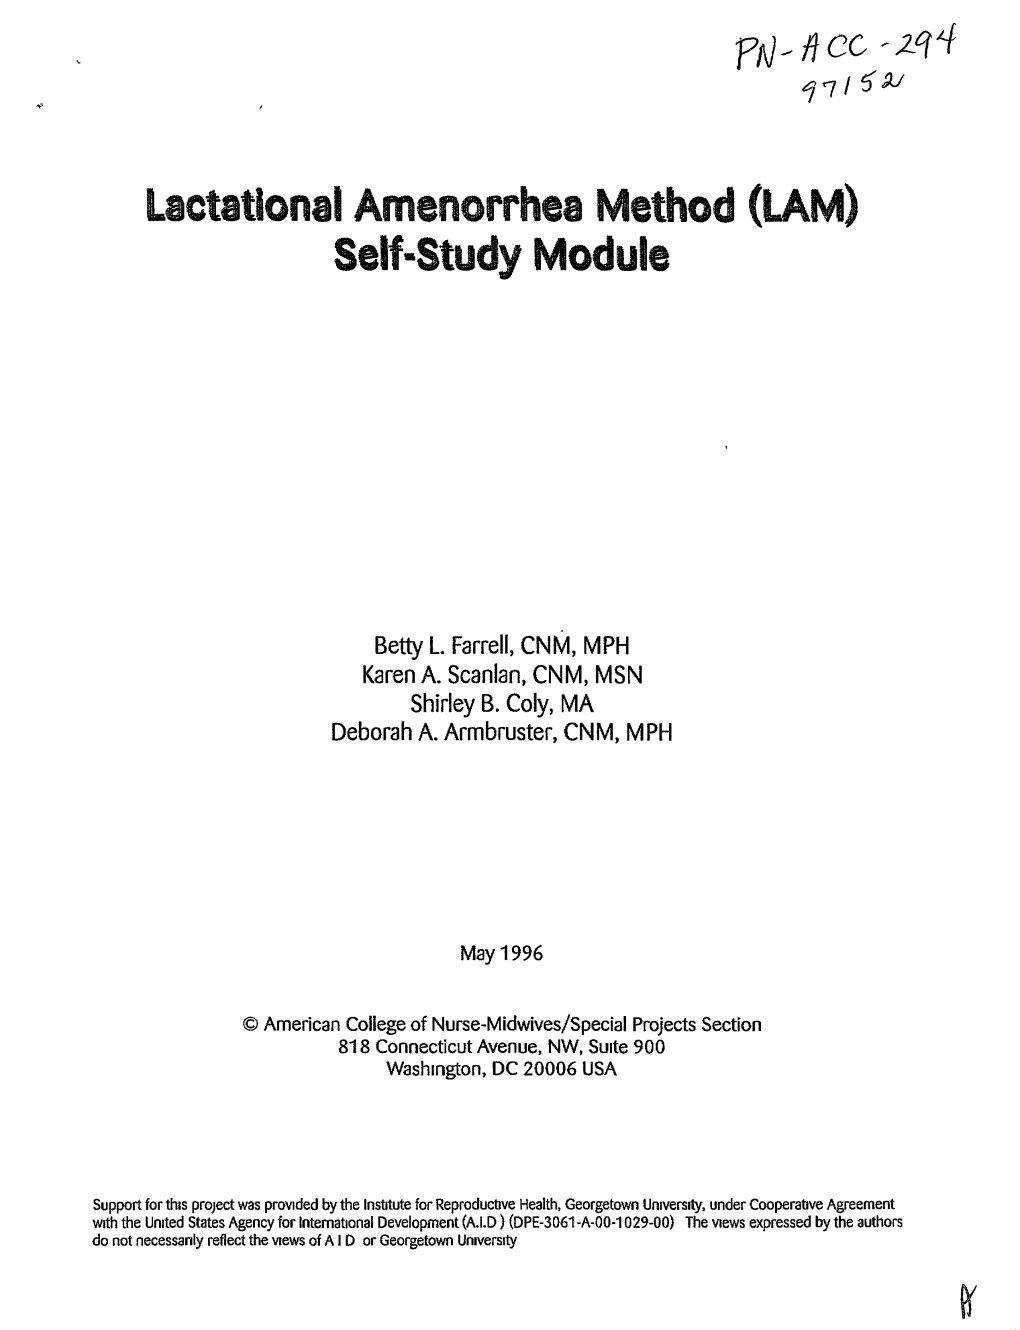 Lactational Amenorrhea Method (LAM) Self-Study Module